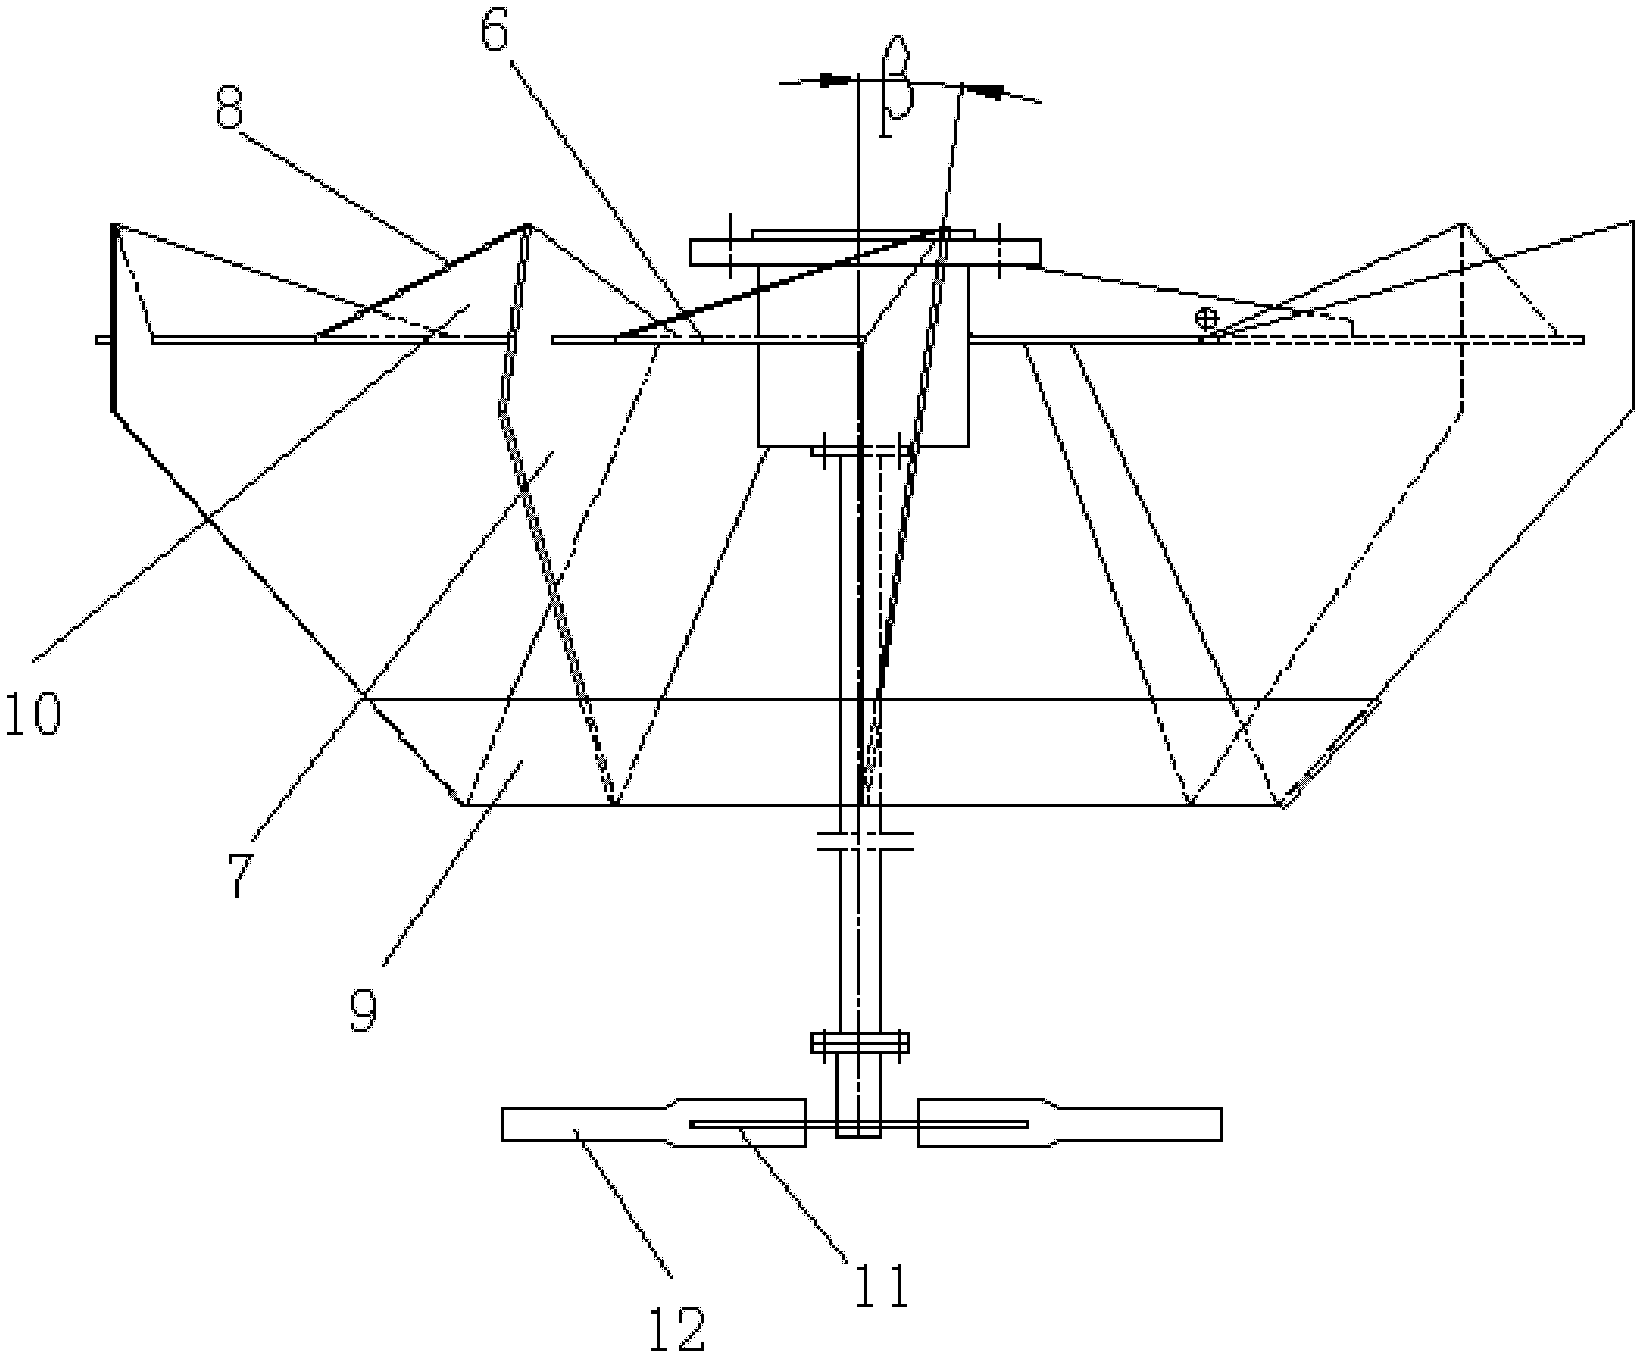 Deep-water type down-umbrella aerator impeller